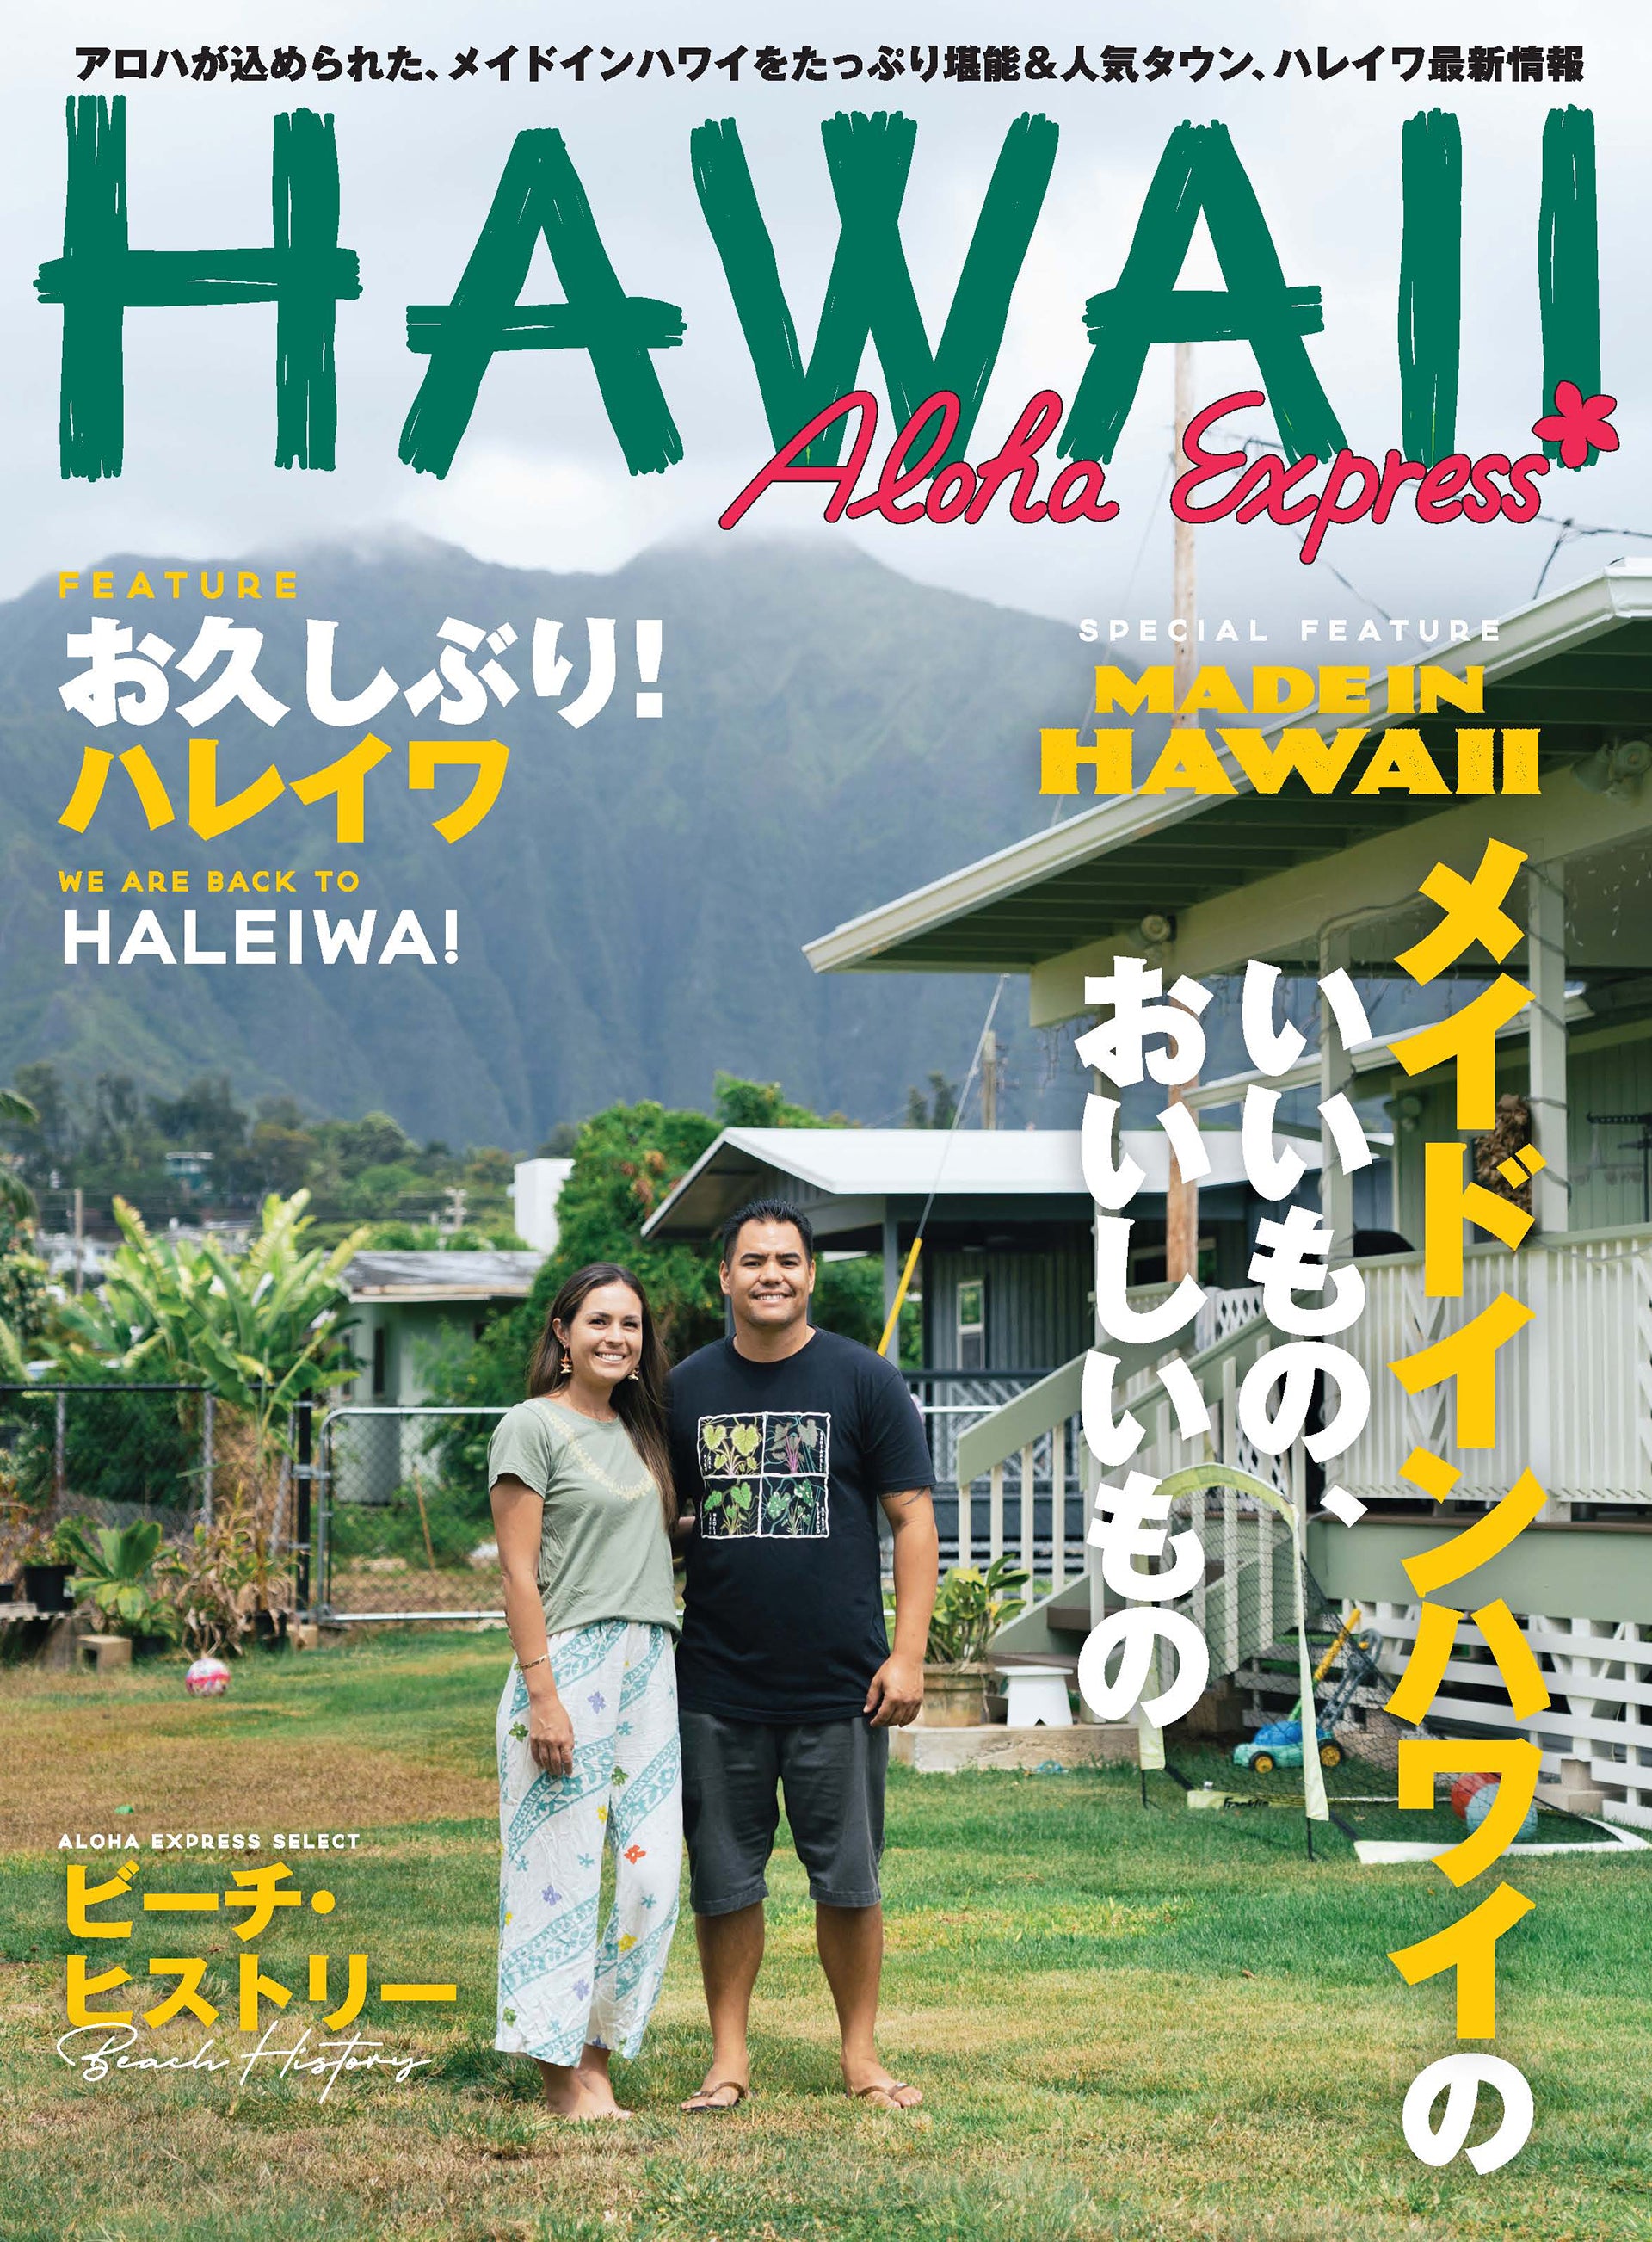 Hawaii Aloha Express Made In Hawaii September Cover